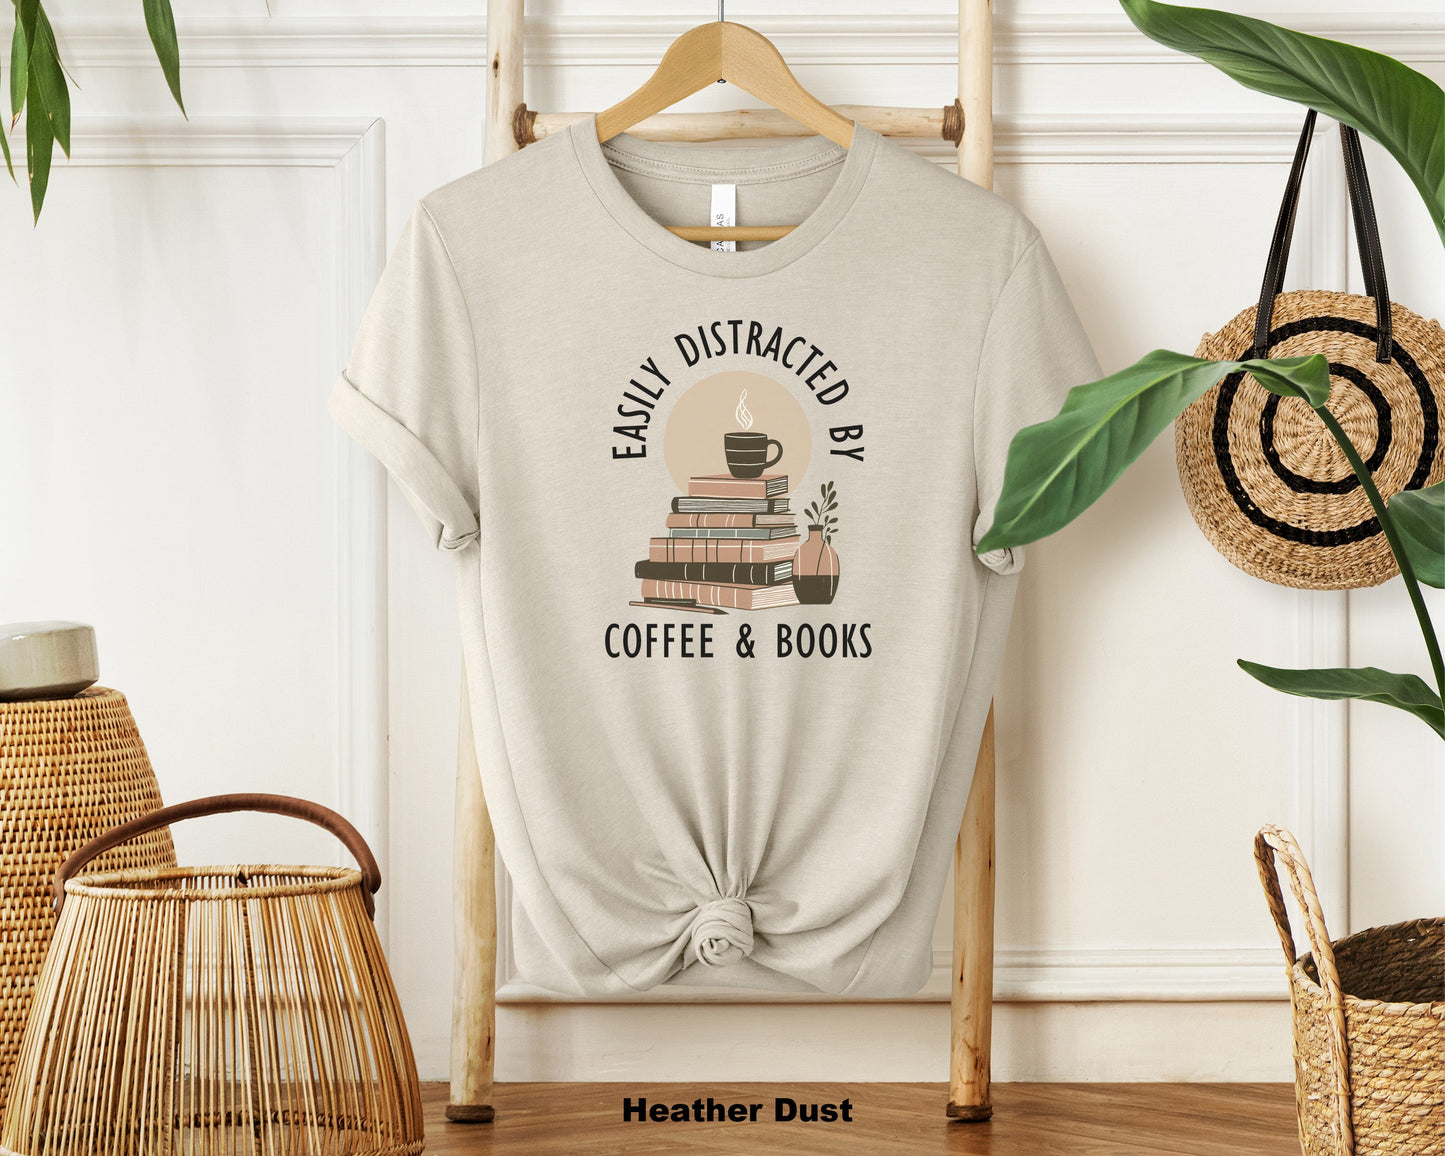 Coffee Comfort: Books-themed Crewneck Tee!